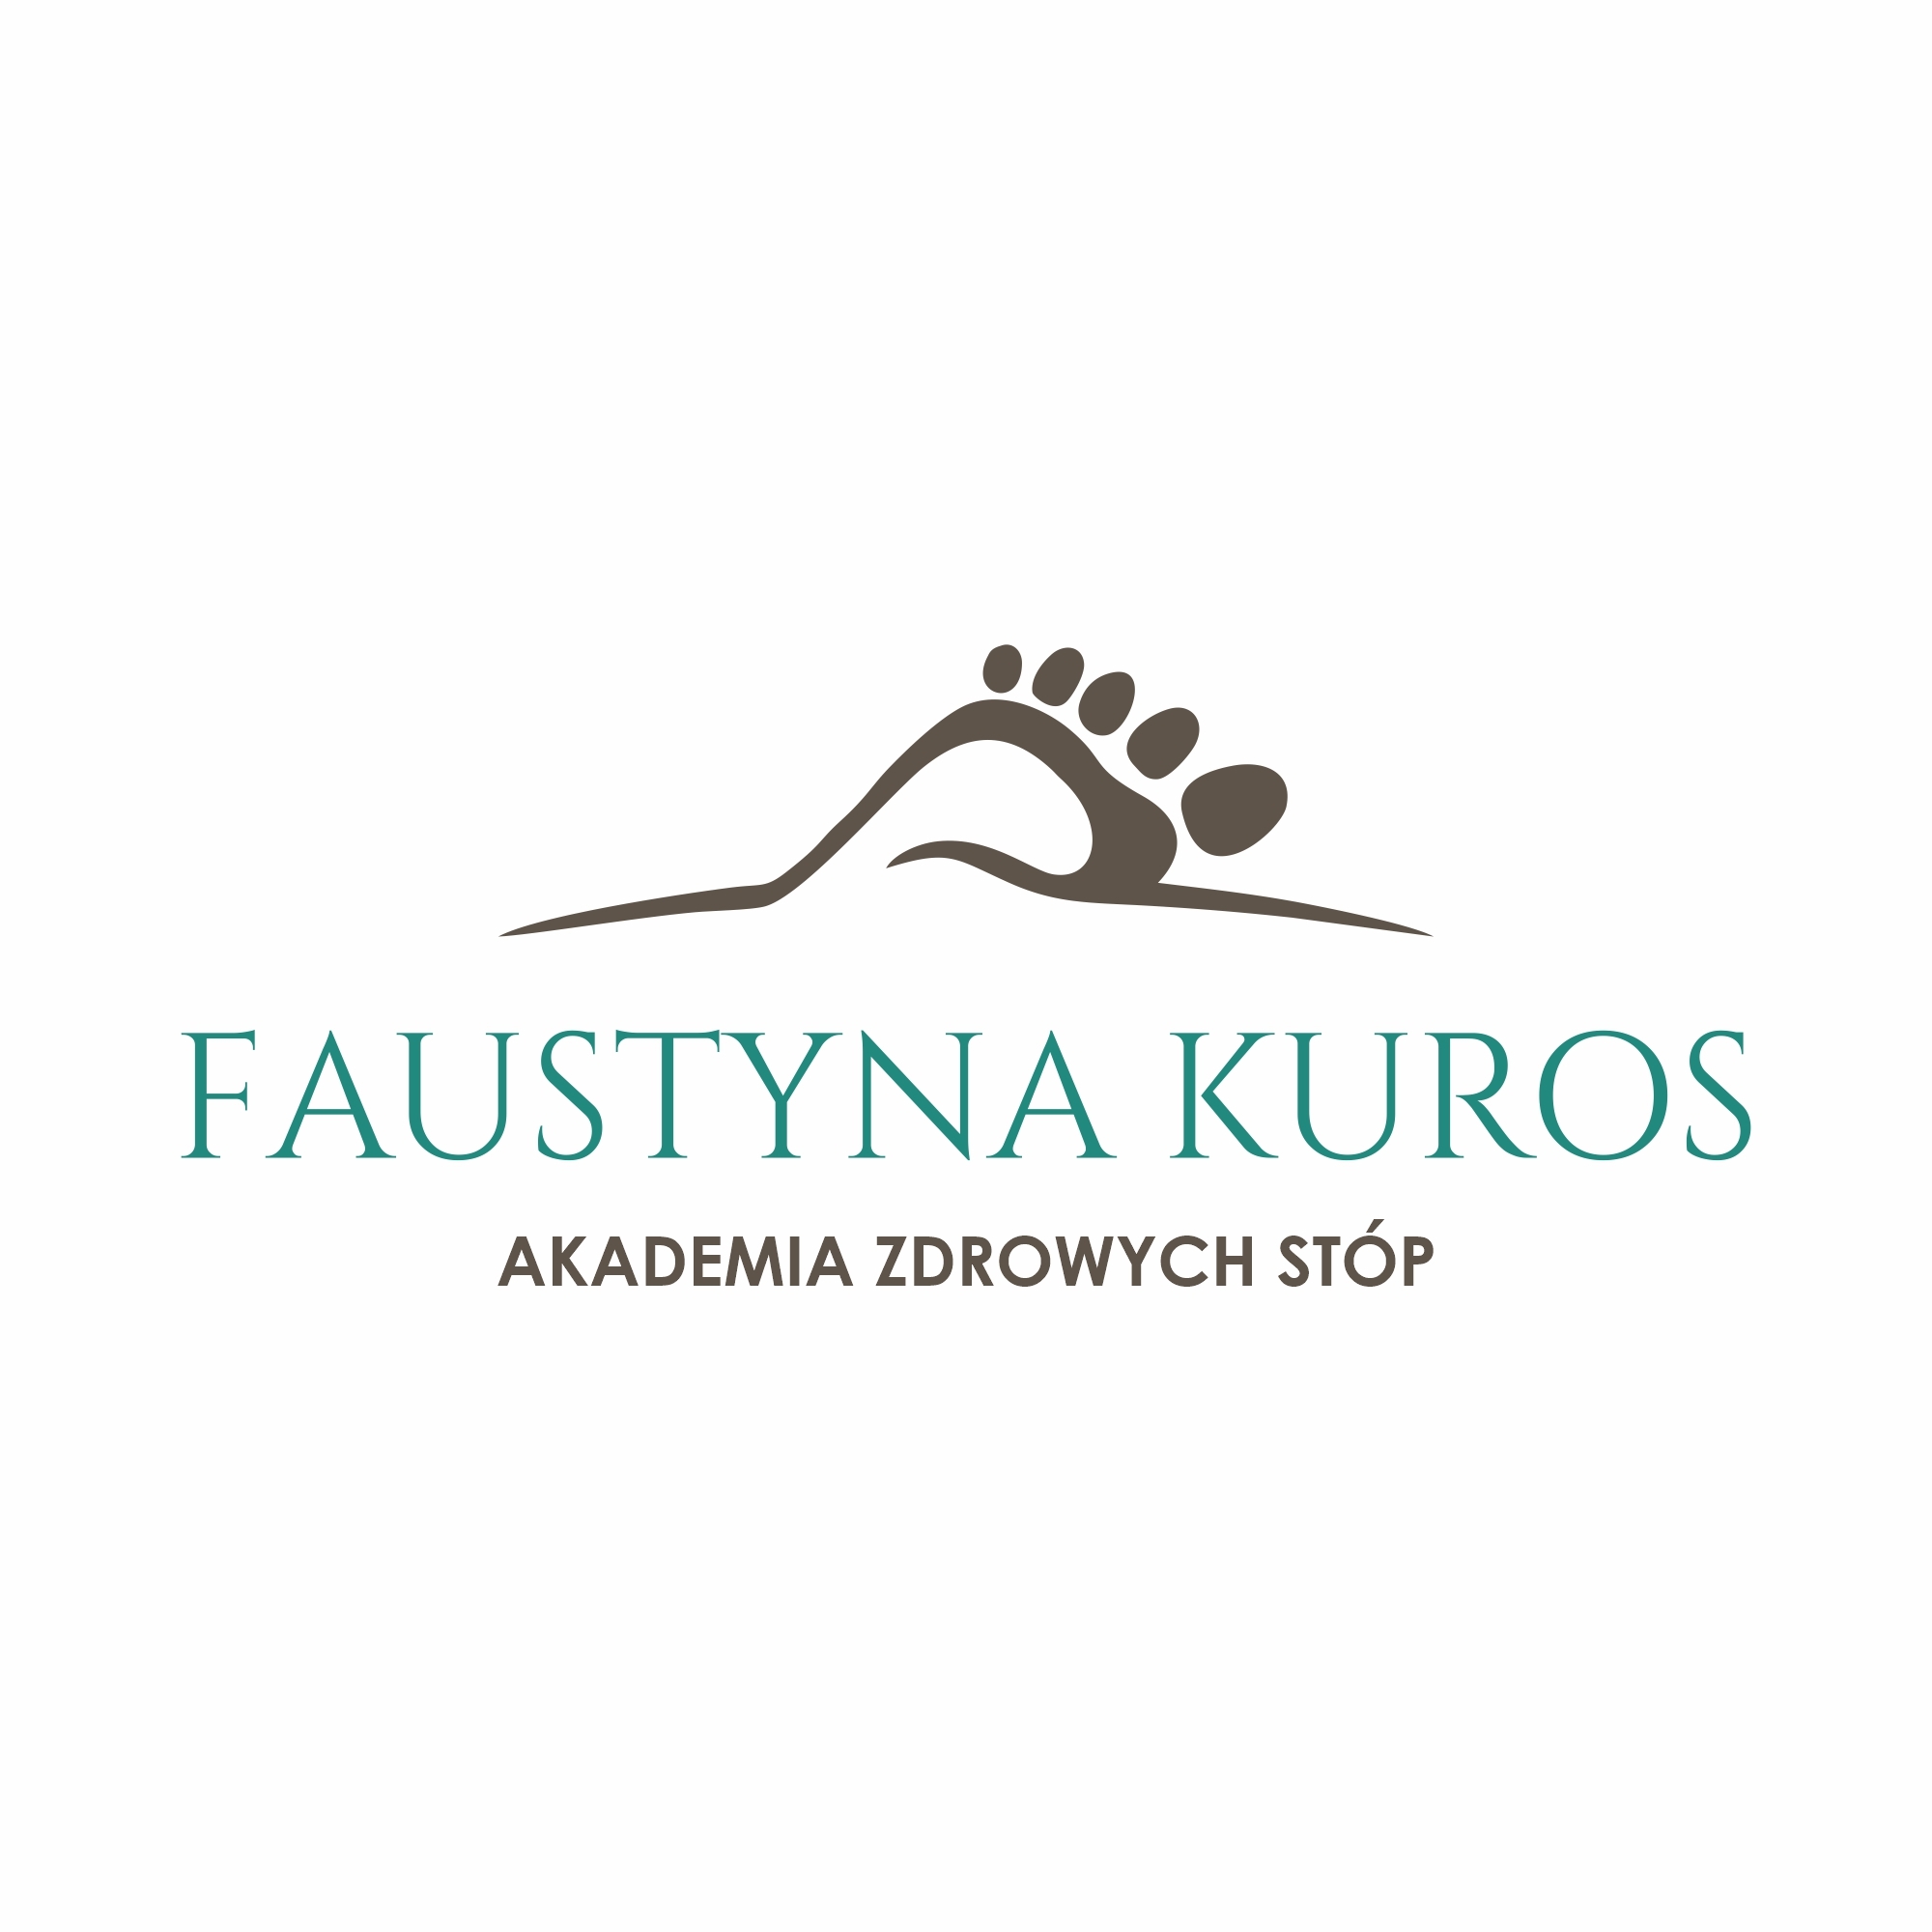 Faustyna Kuros